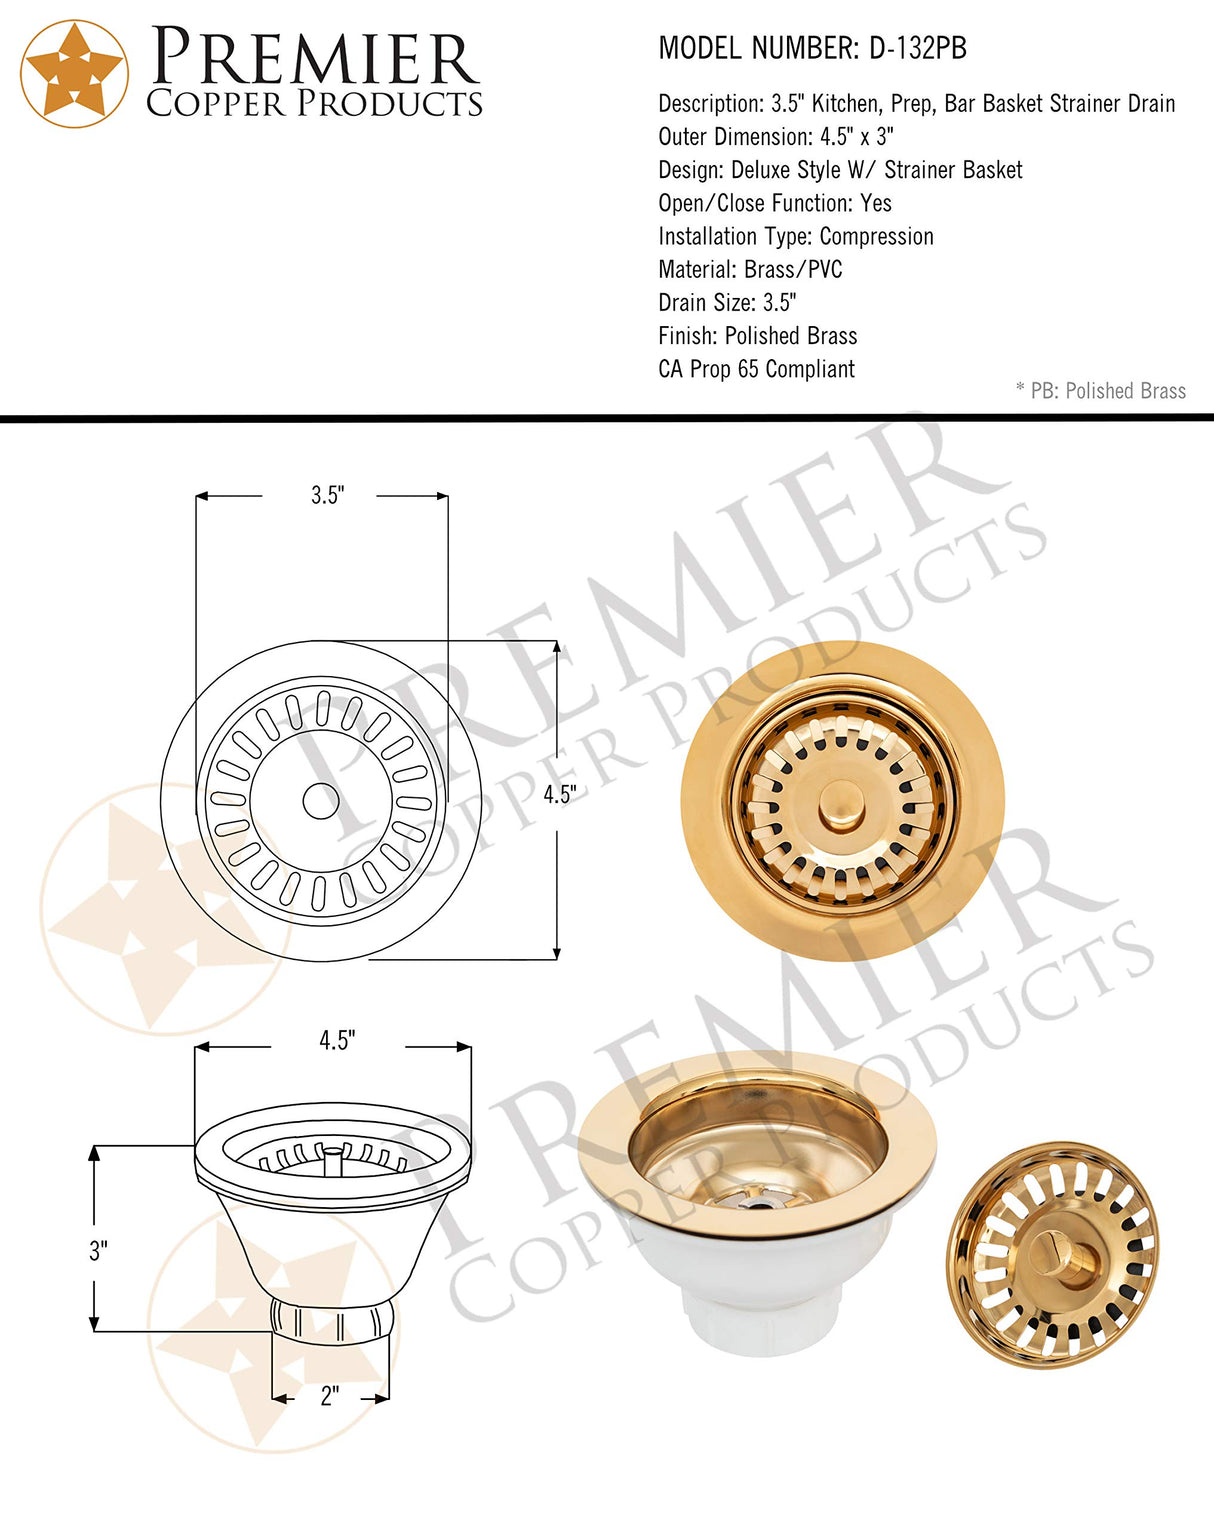 Premier Copper Products D-132PB 3.5-Inch Kitchen, Prep, Bar Basket Strainer Drain, Polished Brass